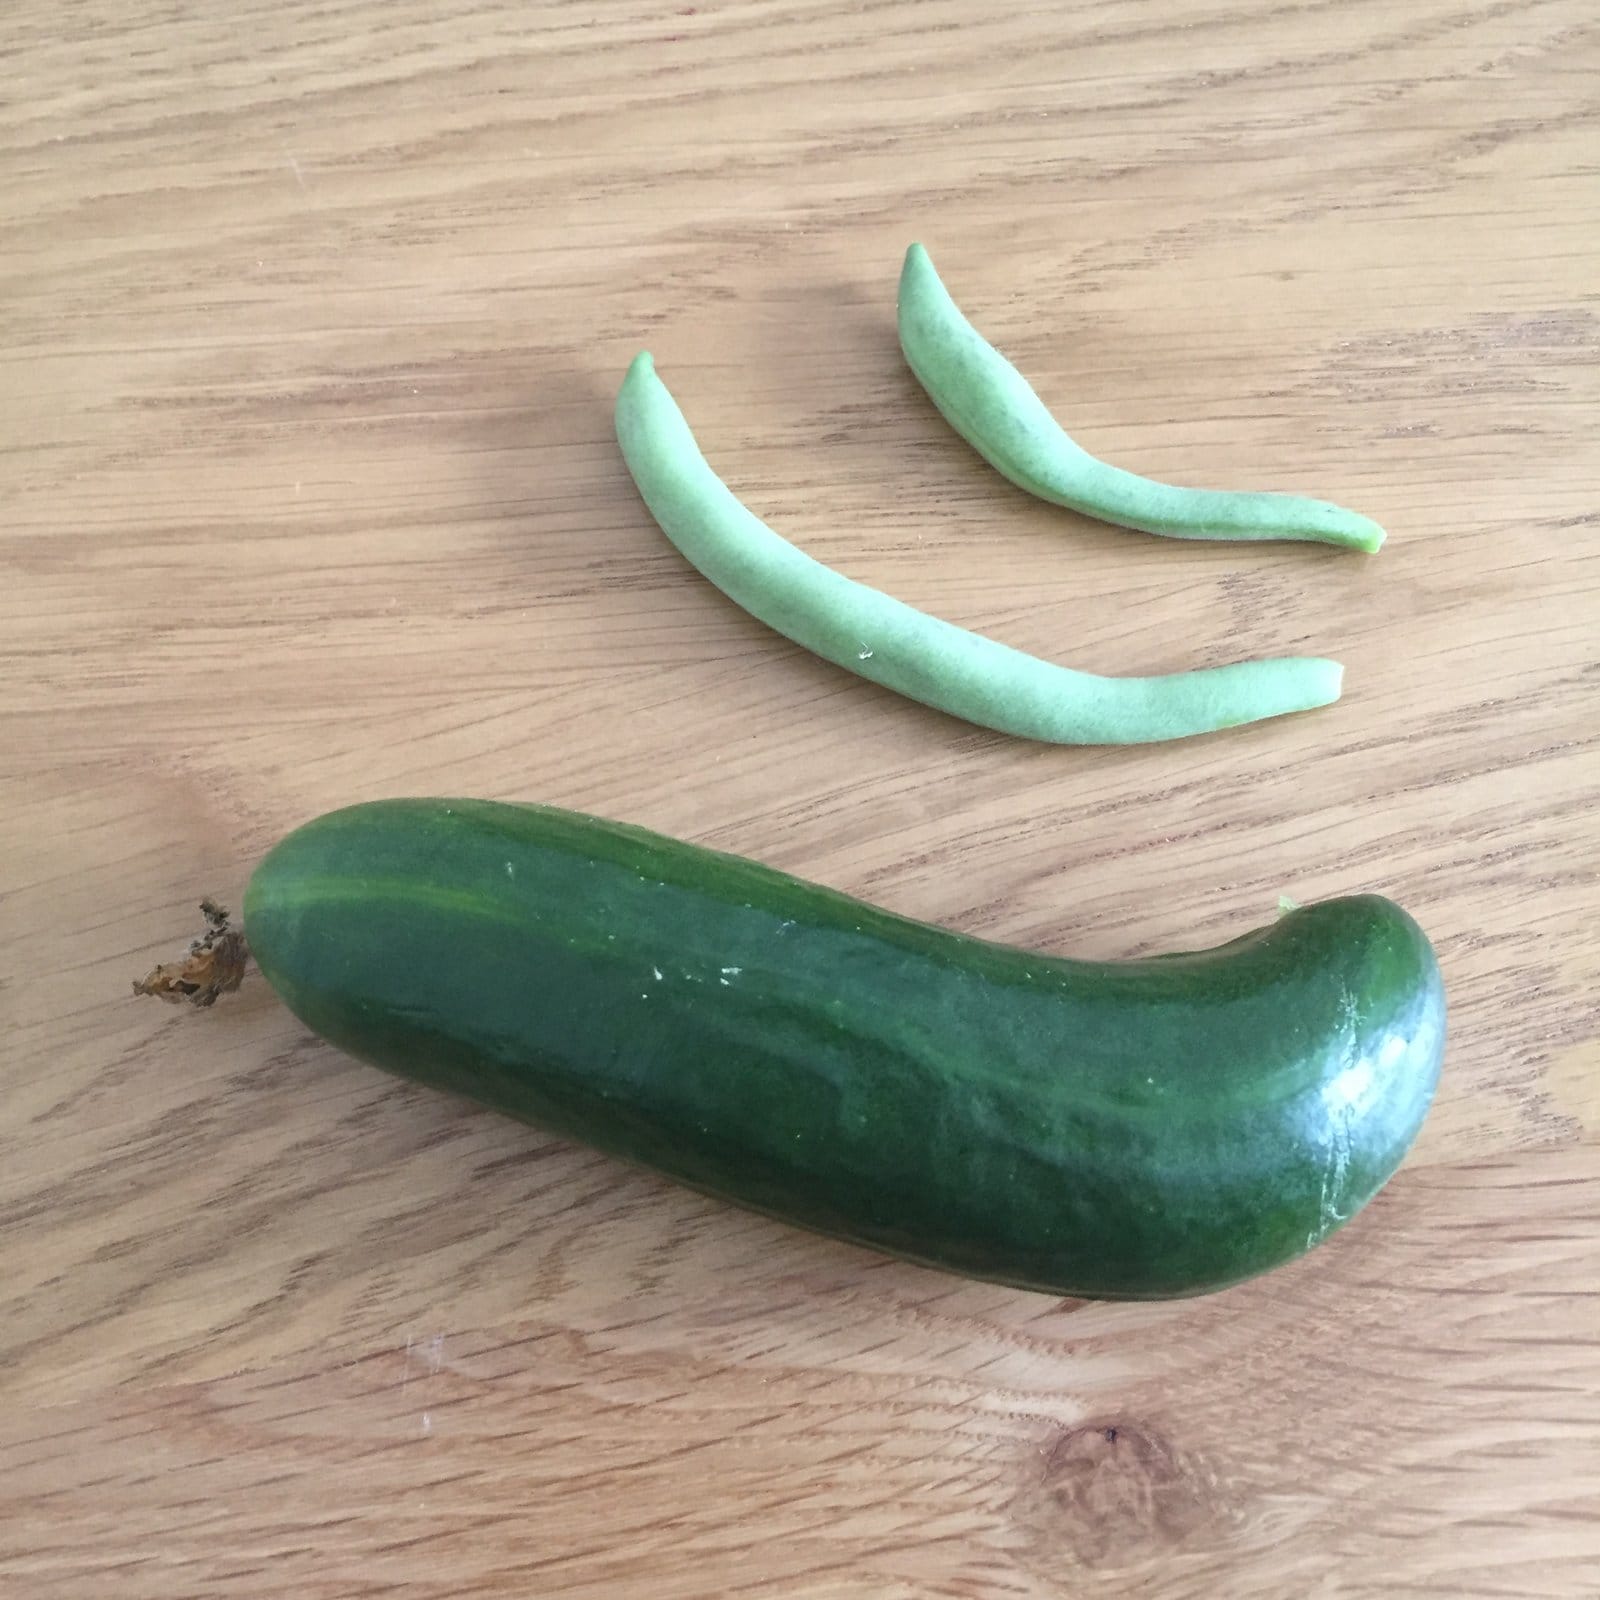 Cucumber & beans